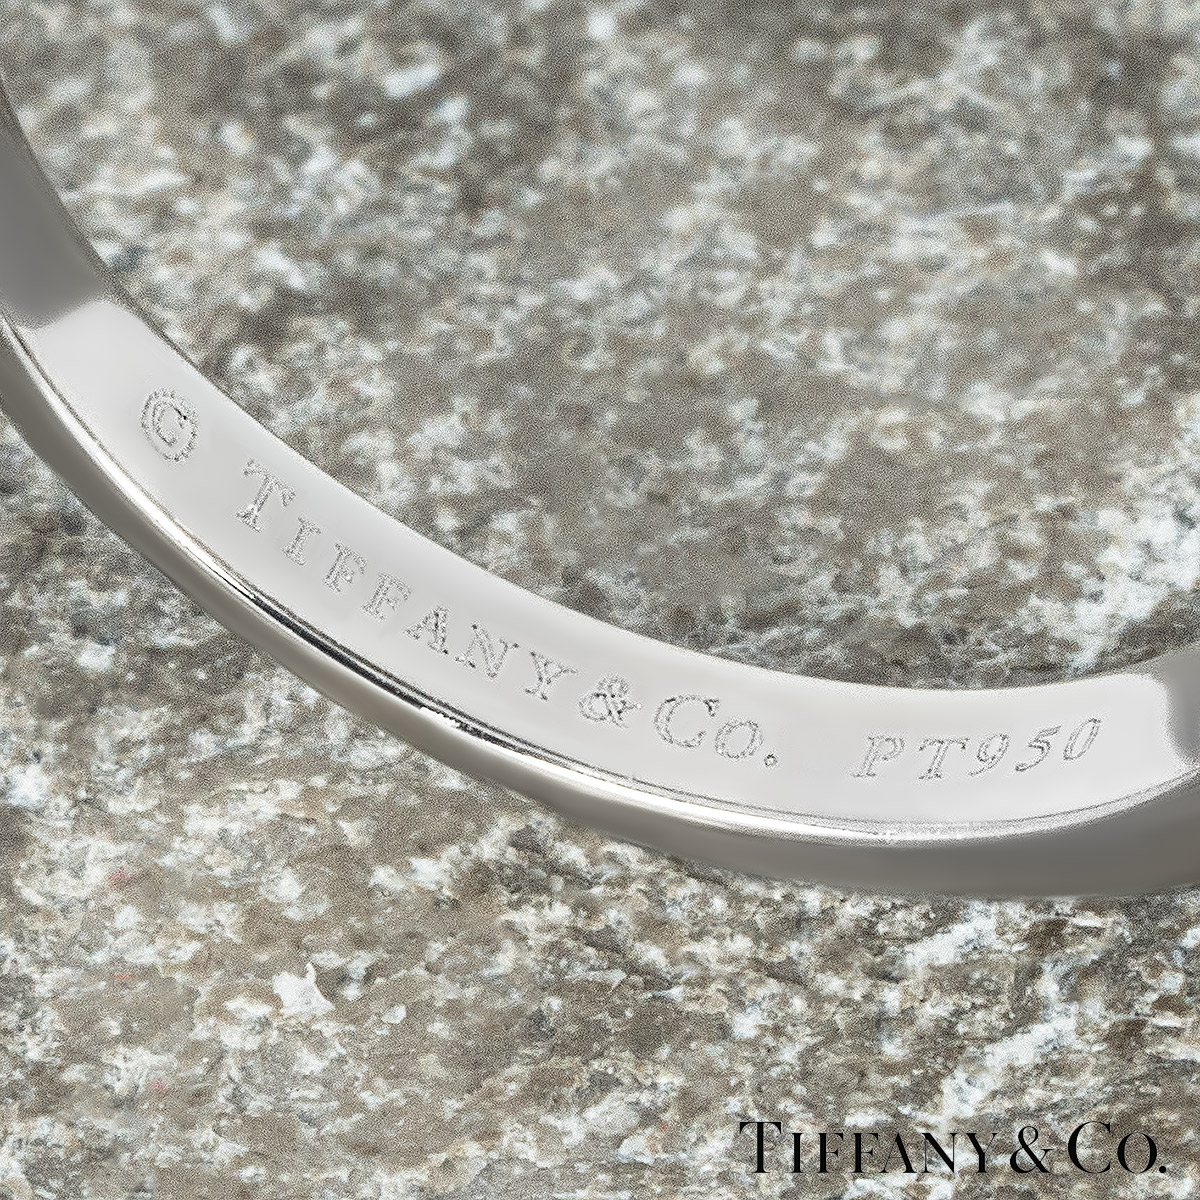 Tiffany & Co. Platinum Round Brilliant Cut Diamond Setting Ring 0.56ct H/VVS1